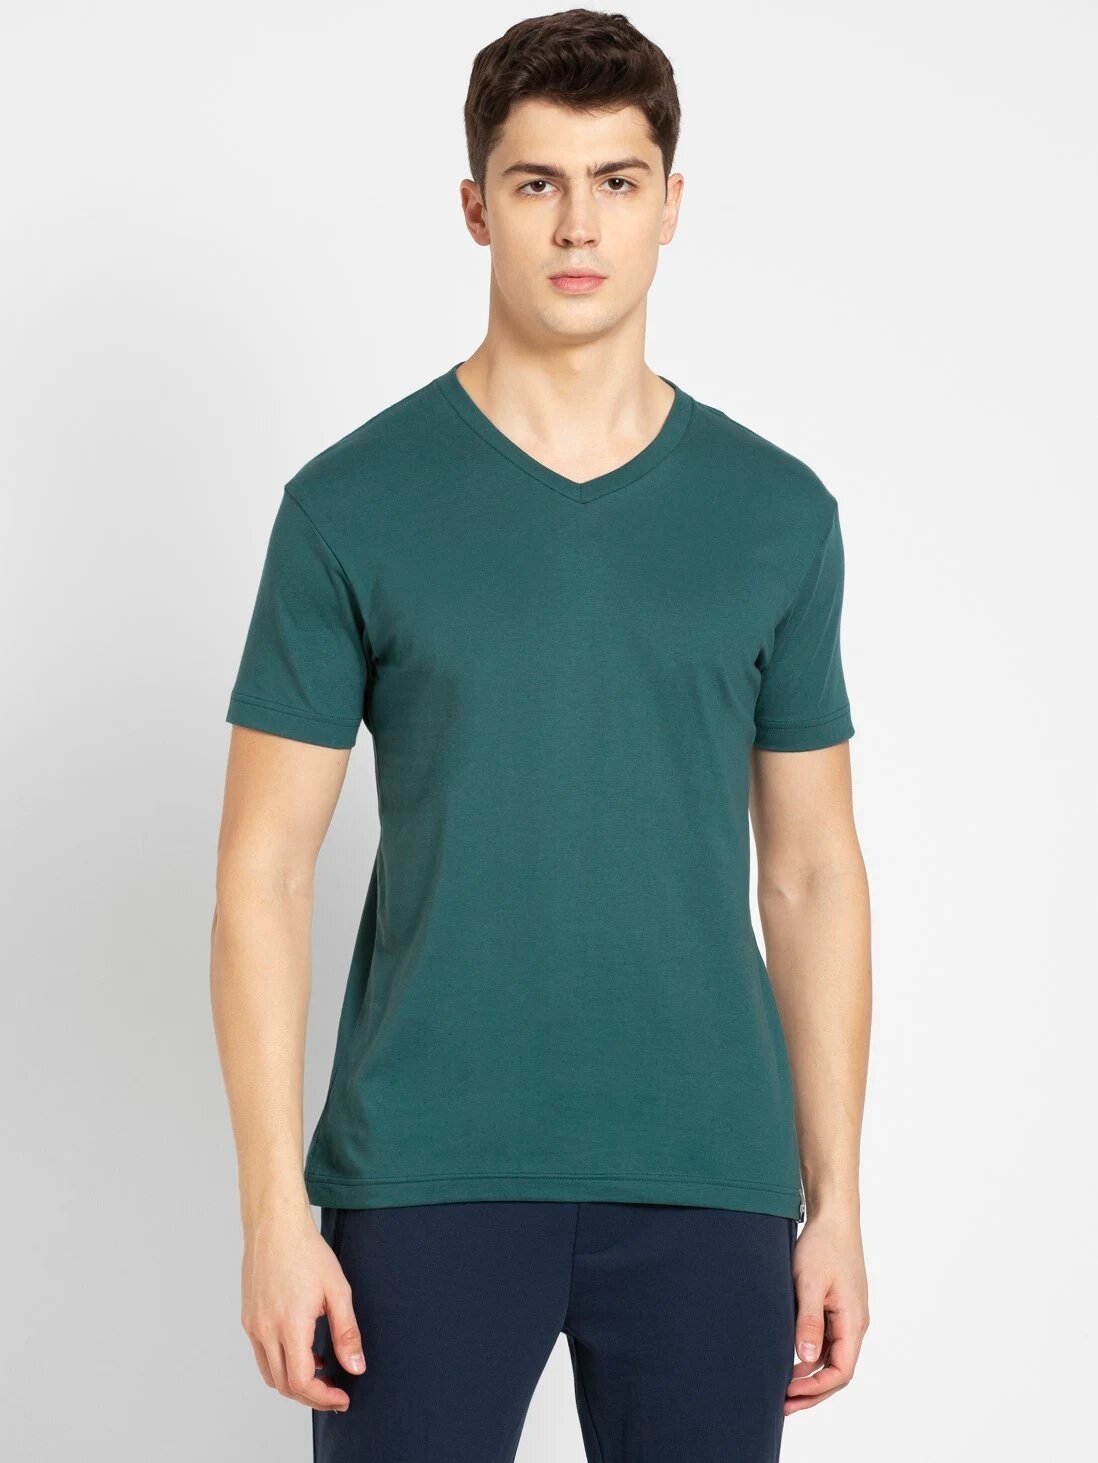 Men's Pacific Green V-Neck T-shirt